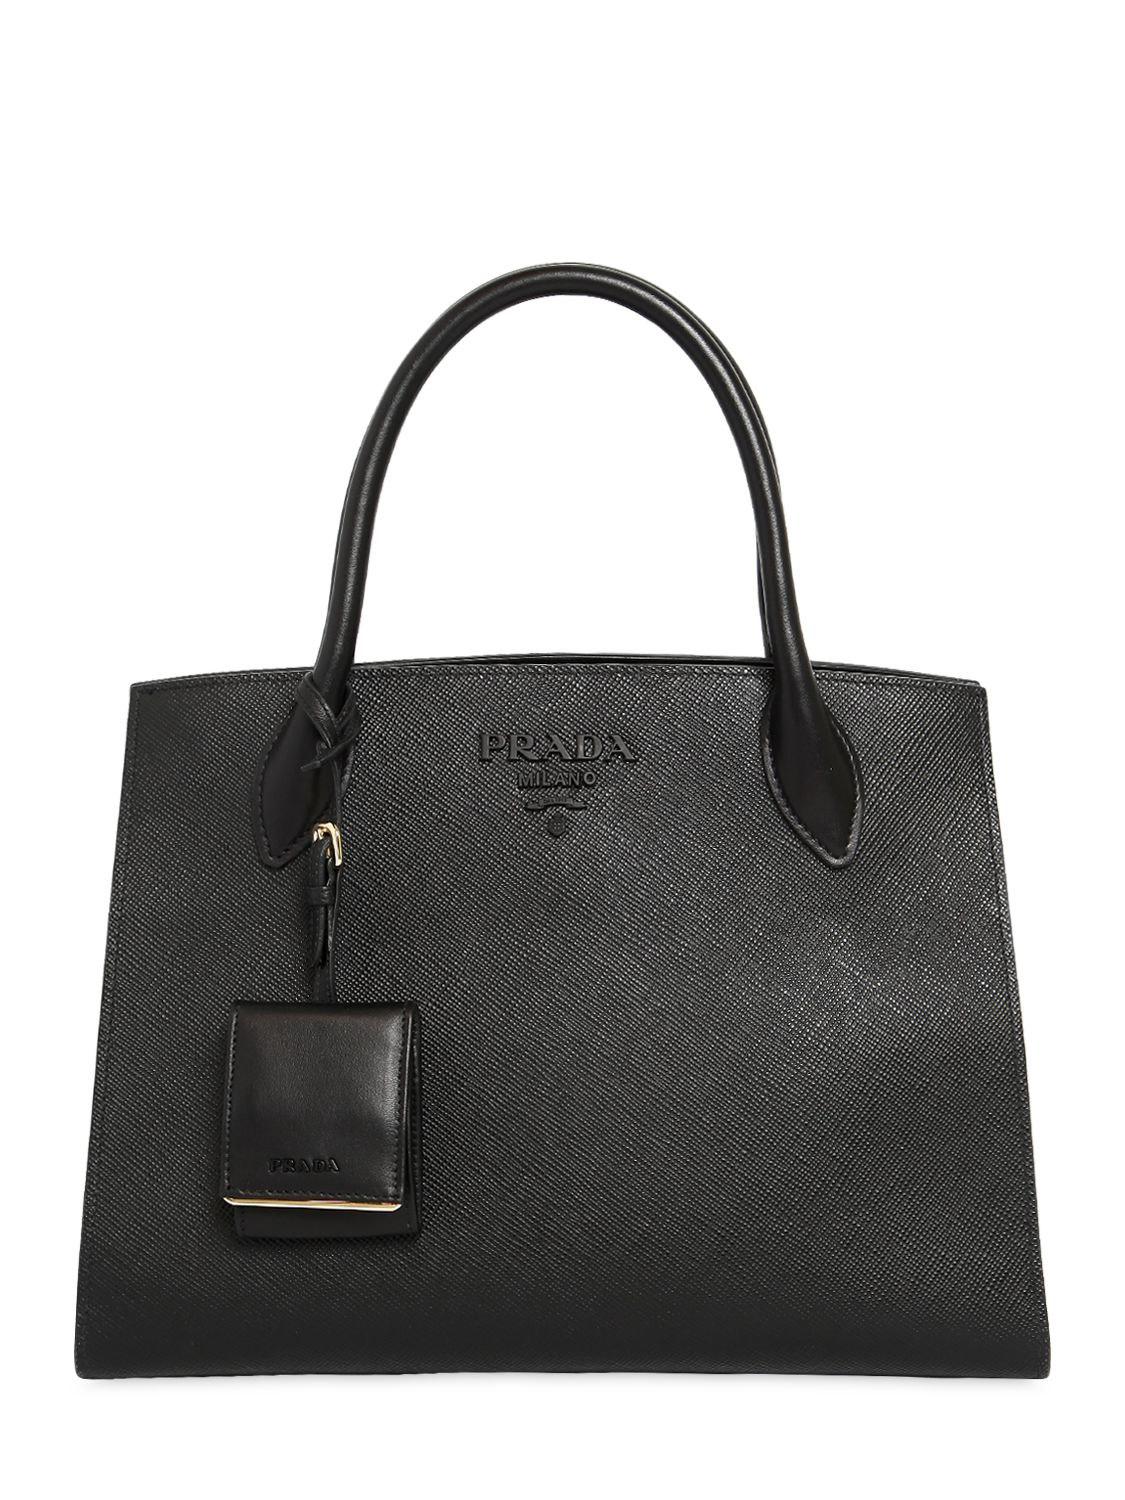 Prada Monochrome Saffiano Leather Bag in Black - Lyst